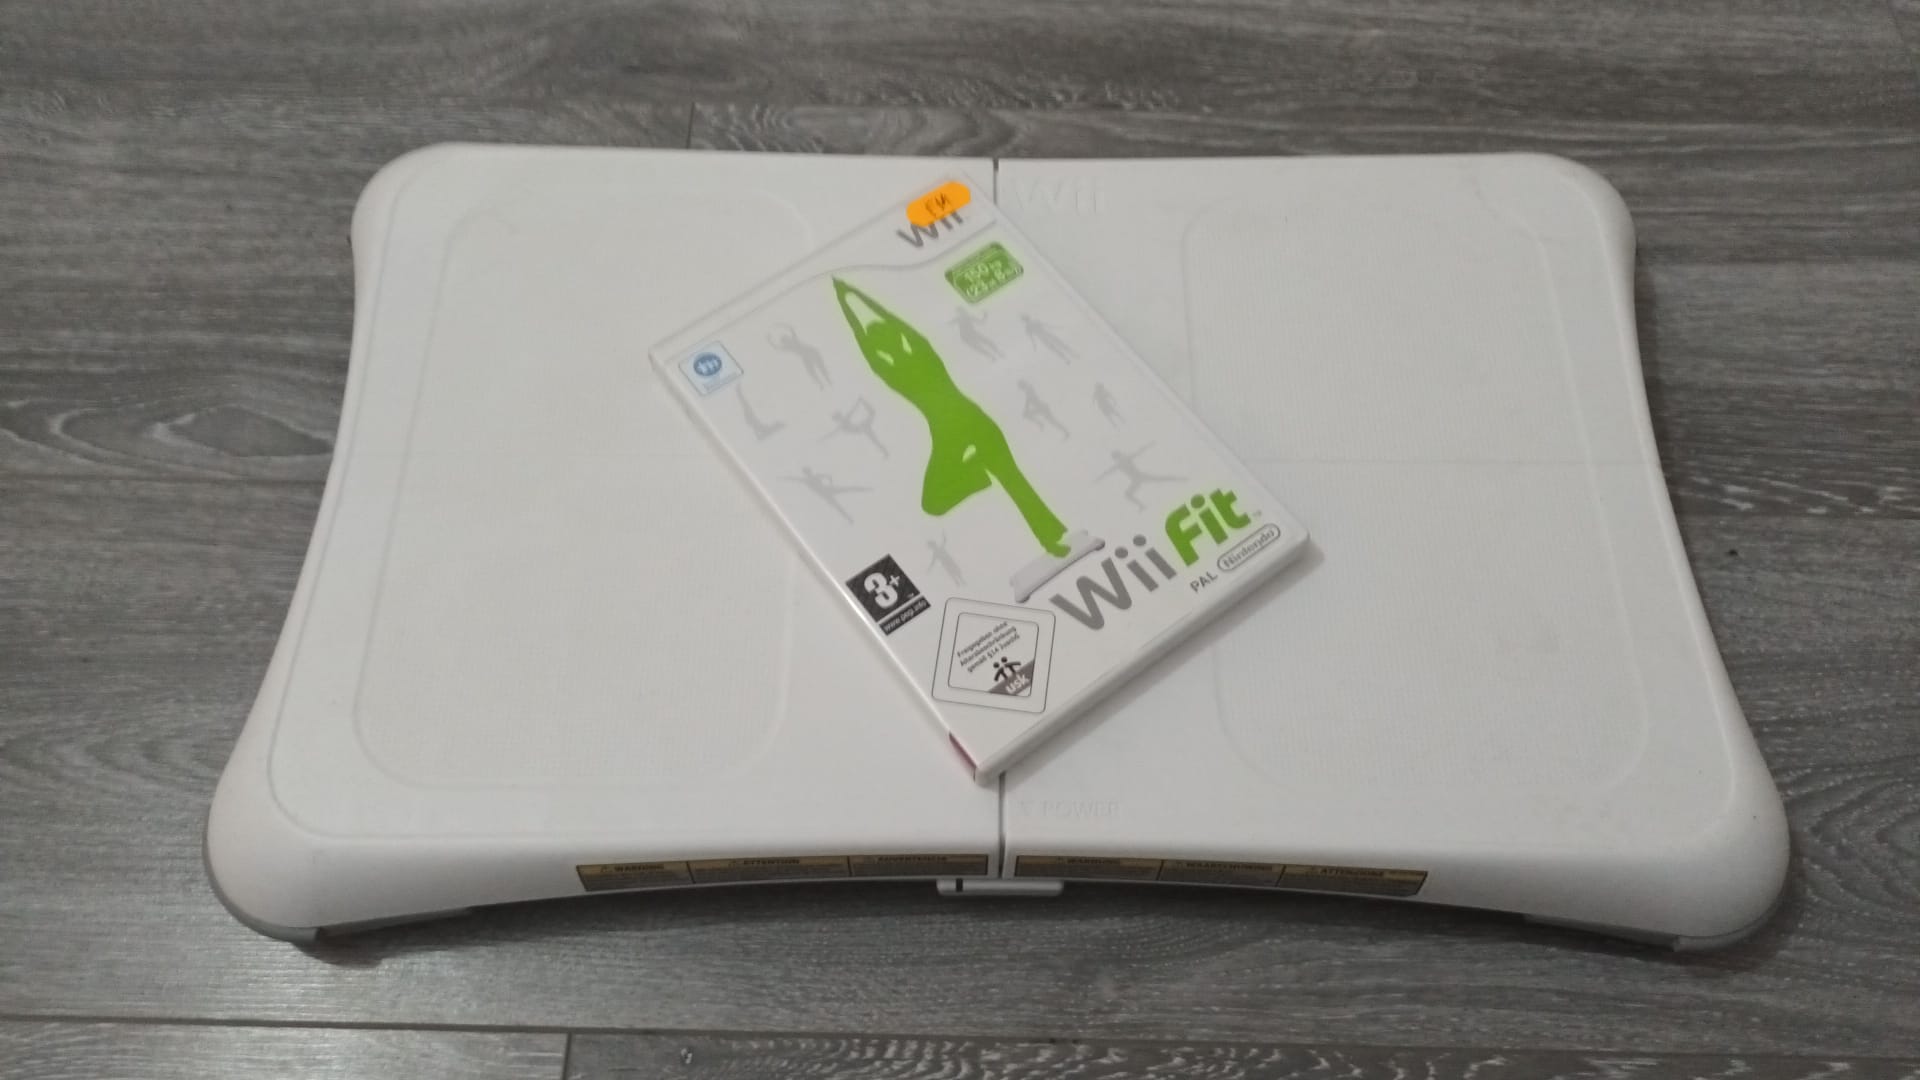 Wii Fit Ballance Board + Wii Fit - Nintendo Wii